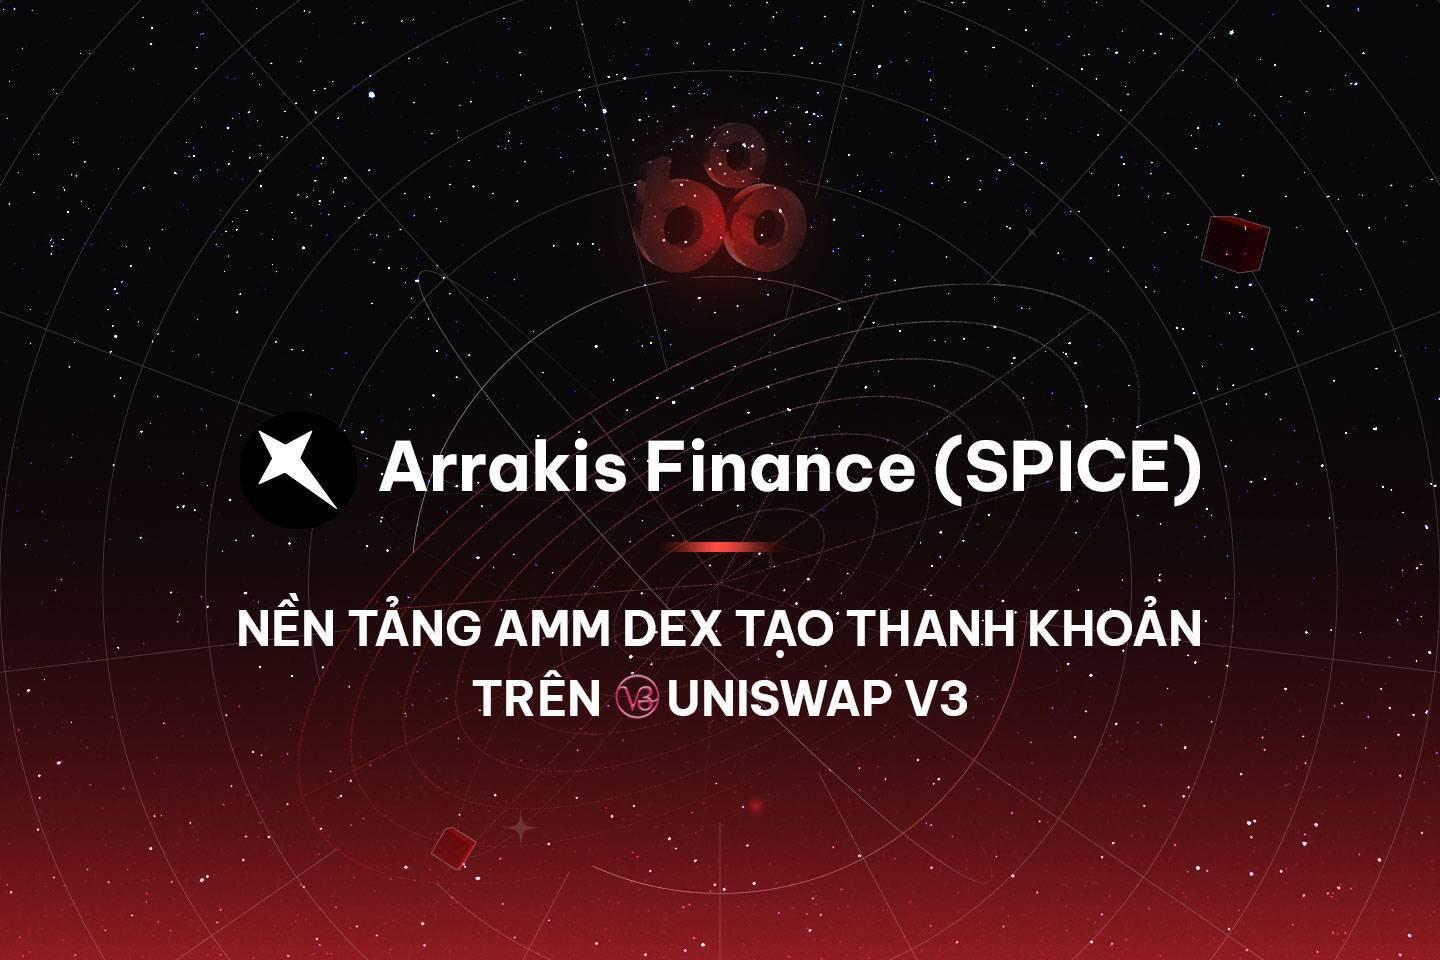 arrakis-finance-spice-nen-tang-amm-dex-tao-thanh-khoan-tren-uniswap-v3